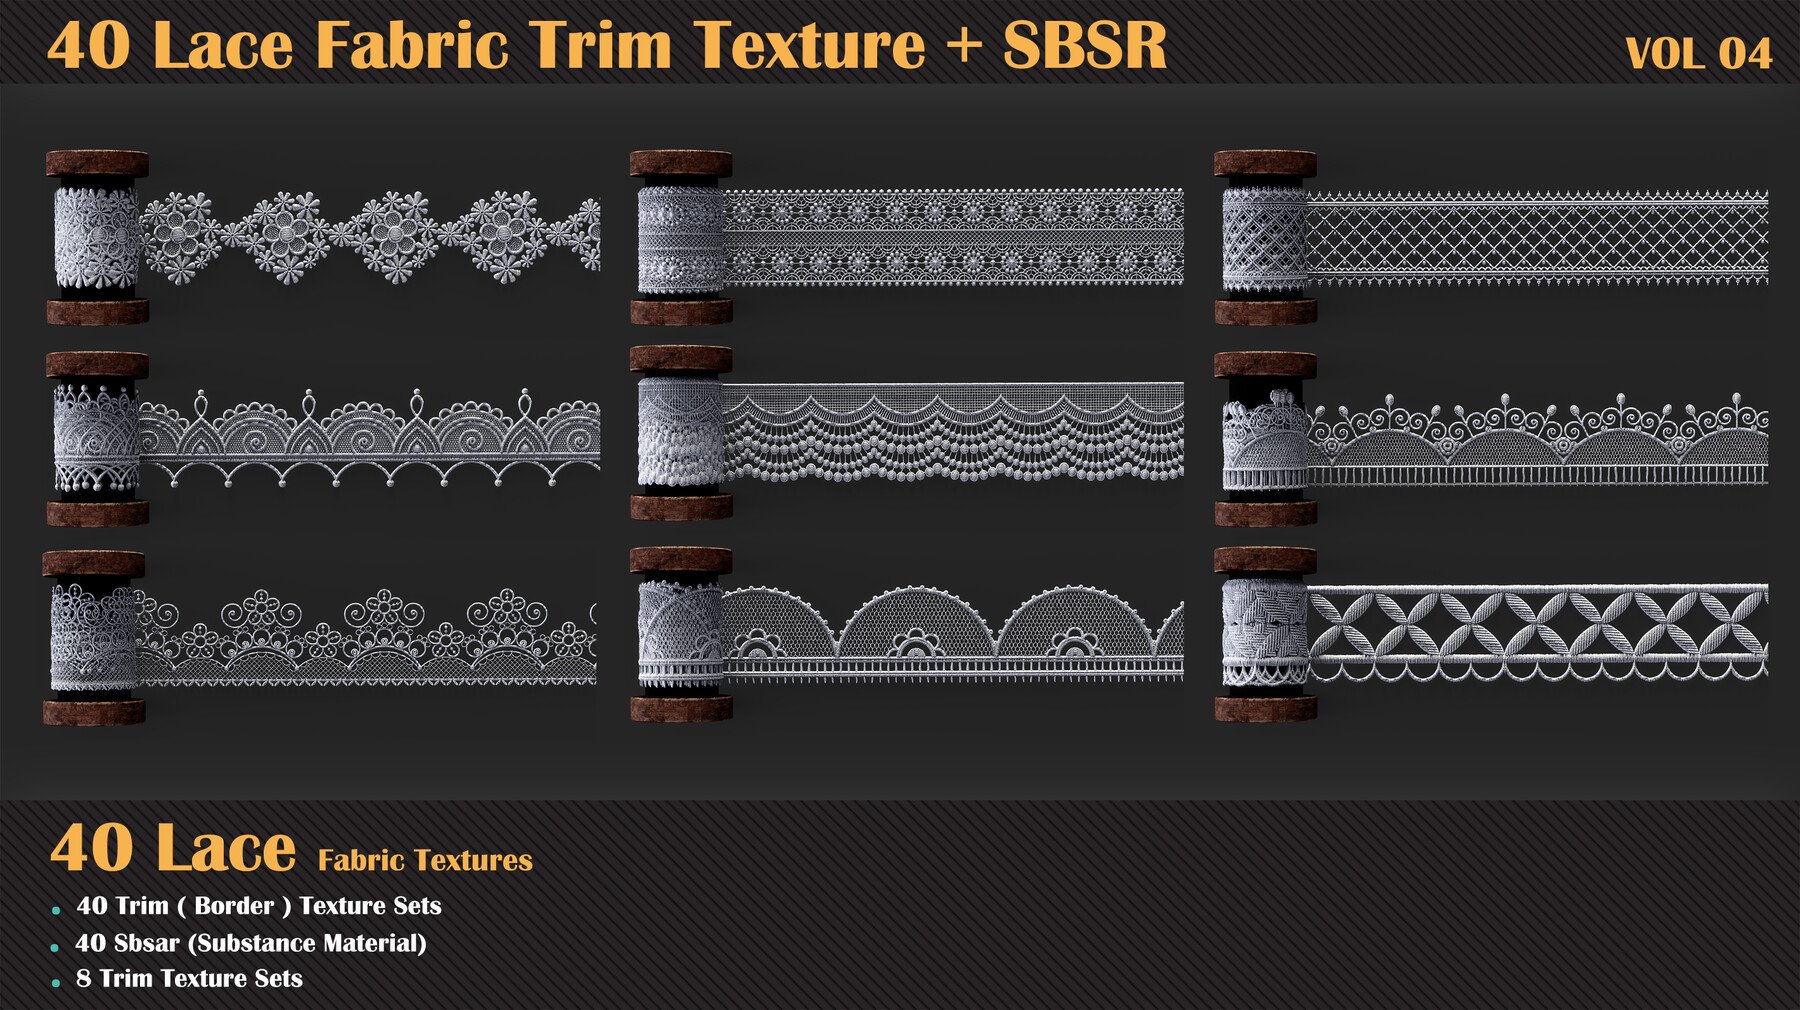 ArtStation - 40 Lace Fabric Trim Texture + SBSR - VOL 04